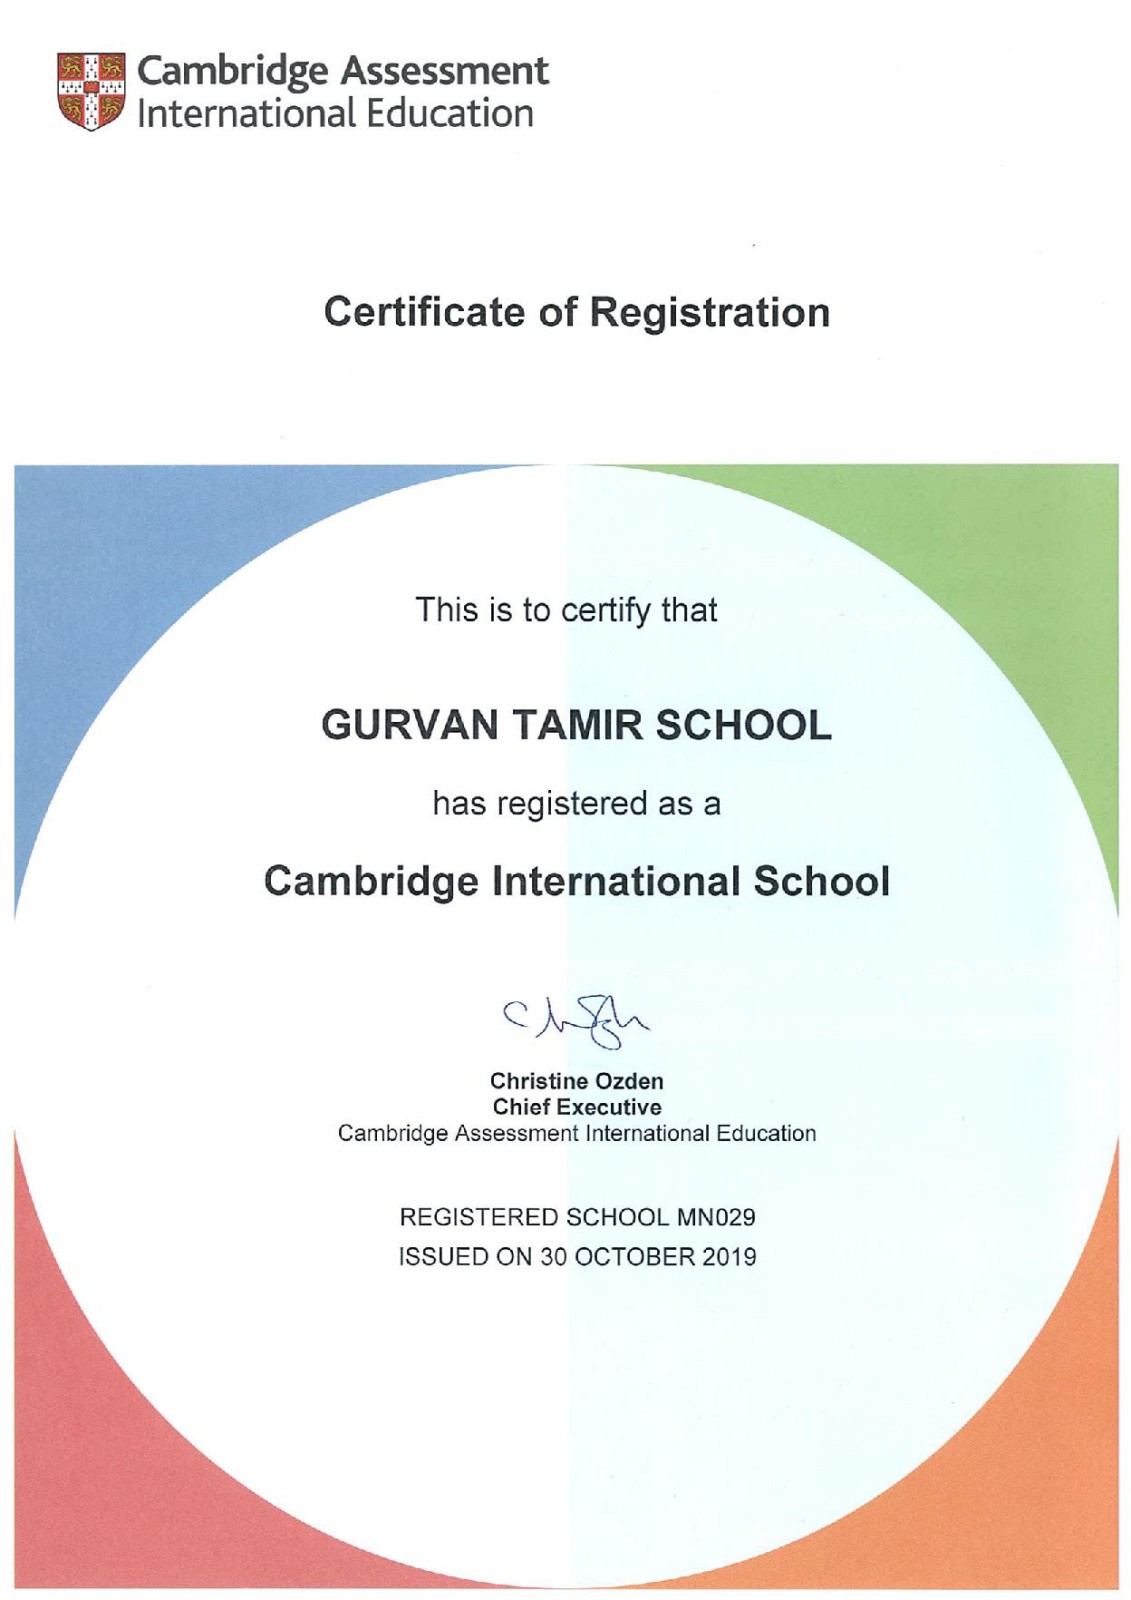 GURVAN TAMIR SCHOOL RECEIVES THE CERTIFICATE OF REGISTRATION AS A CAMBRIDGE INTERNATIONAL SCHOOL